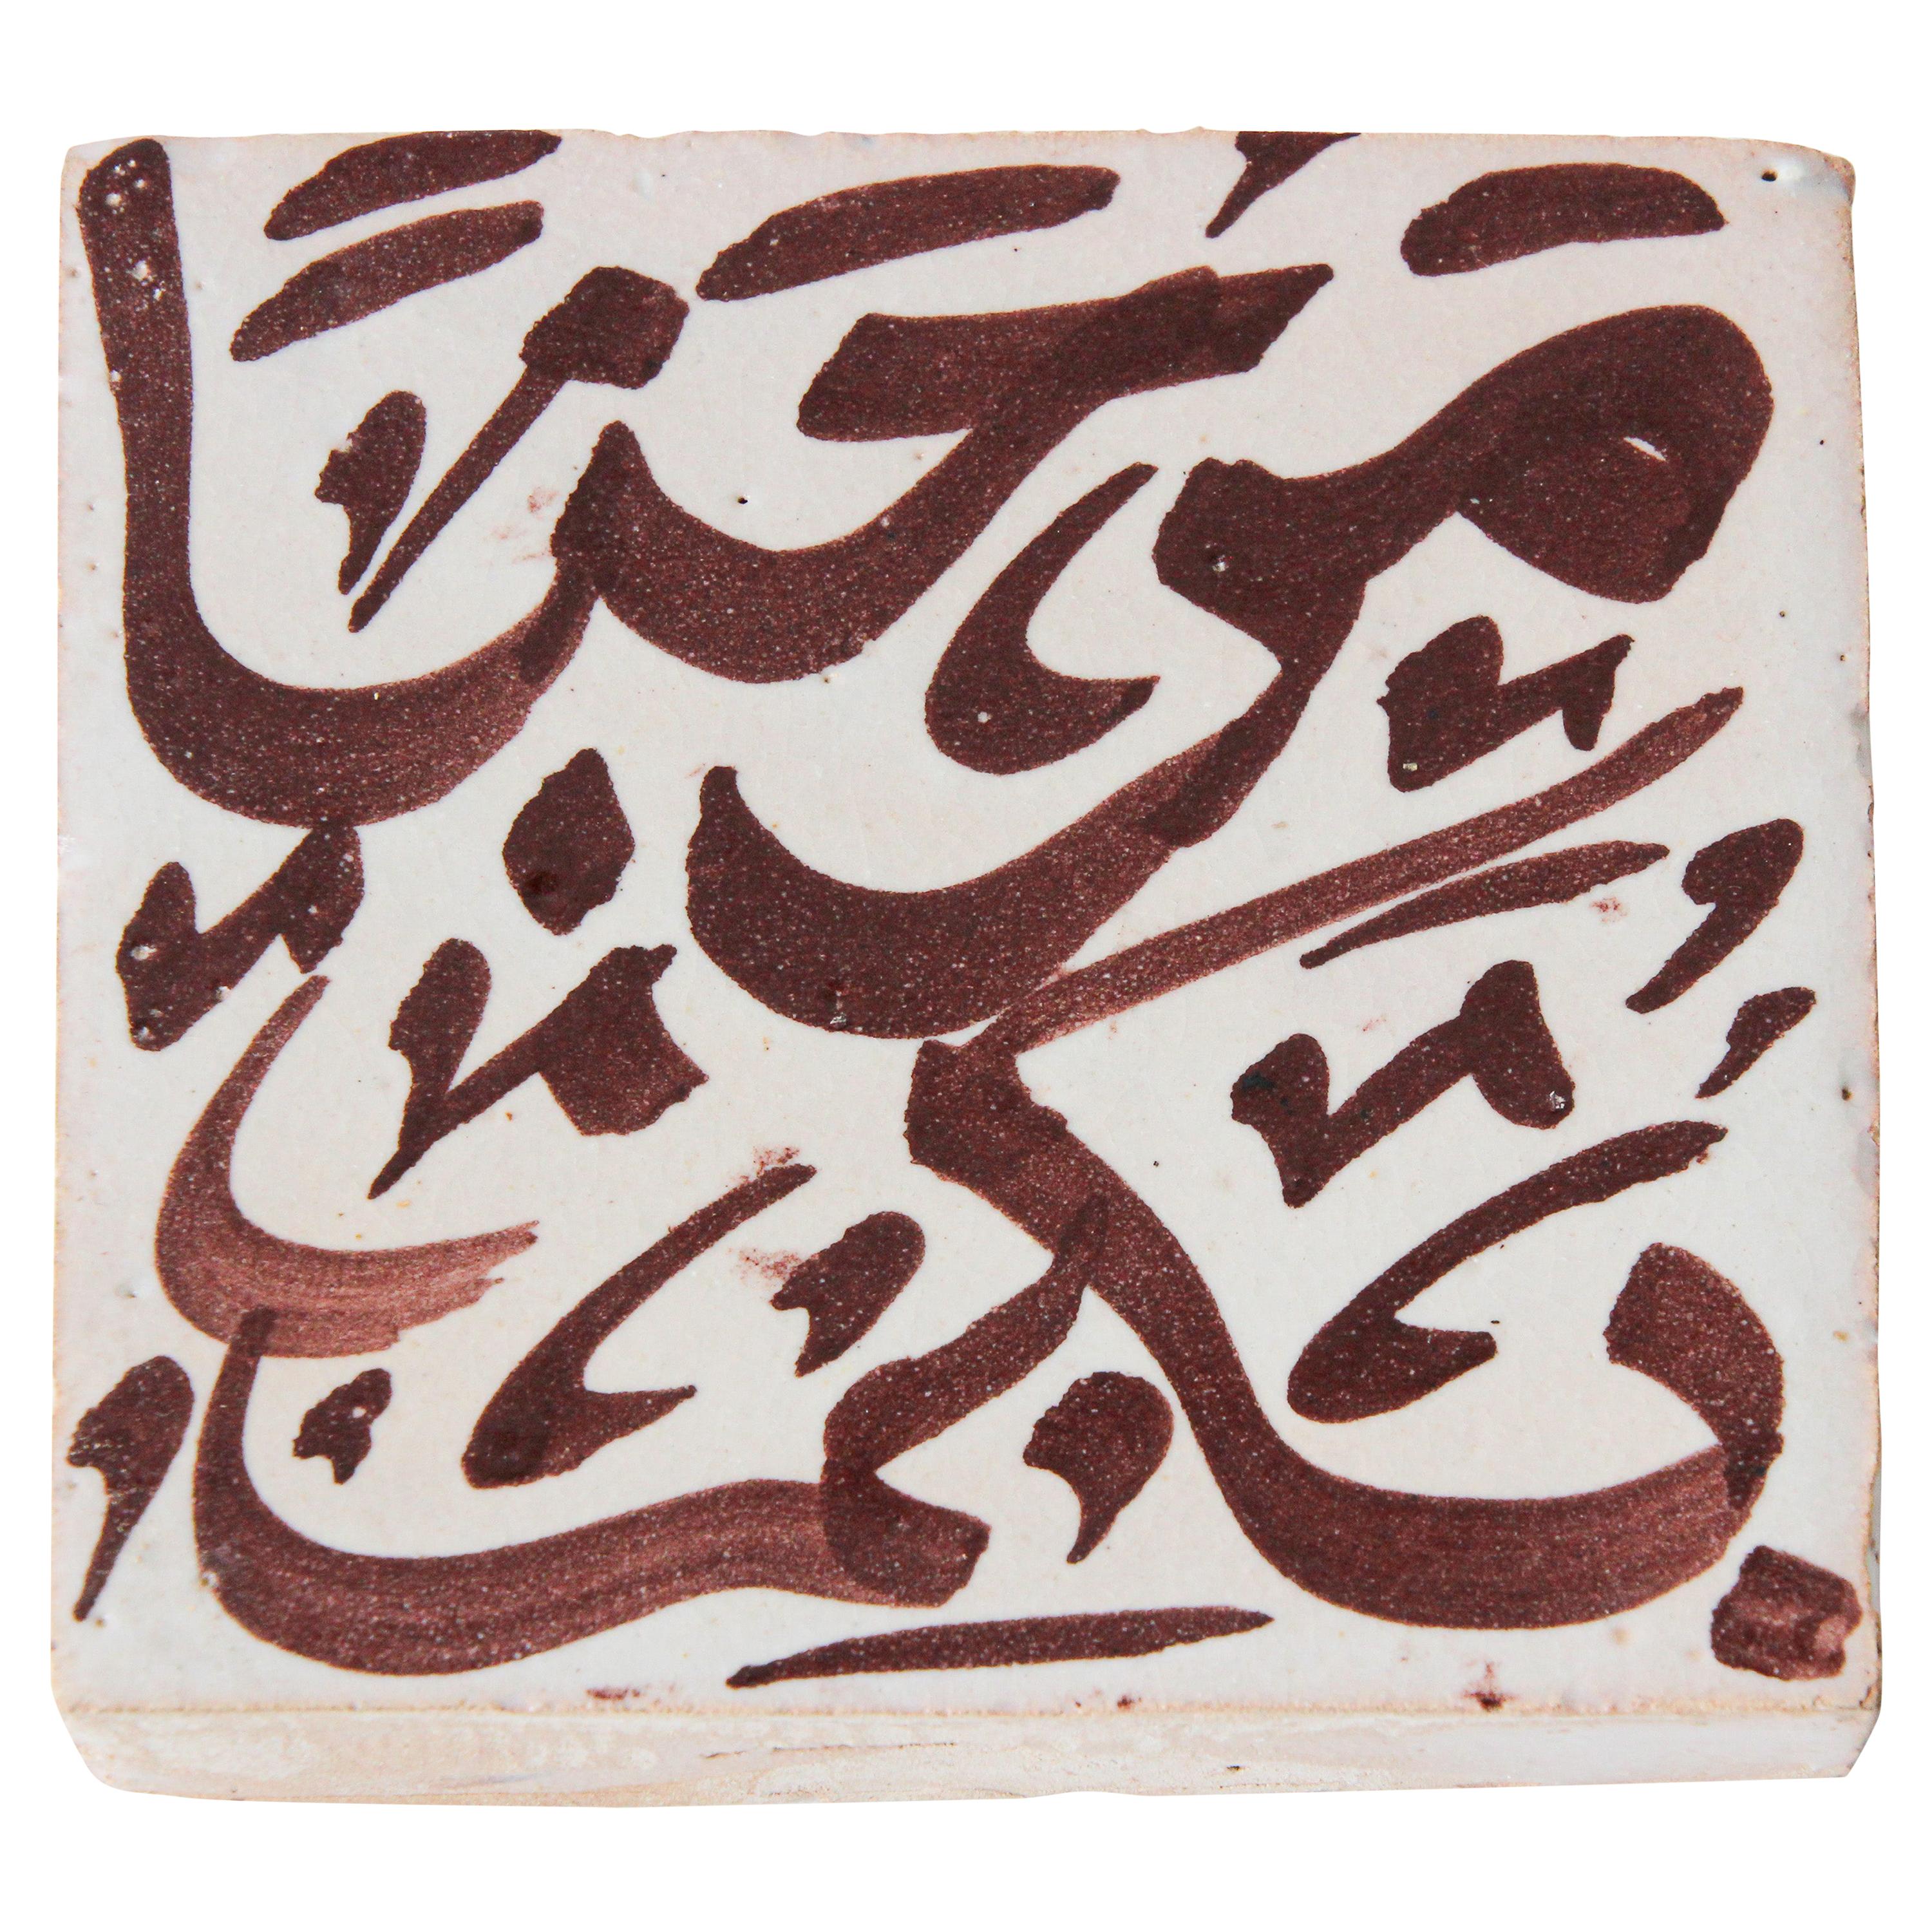 Moorish Ceramic Tile with Arabic Writing